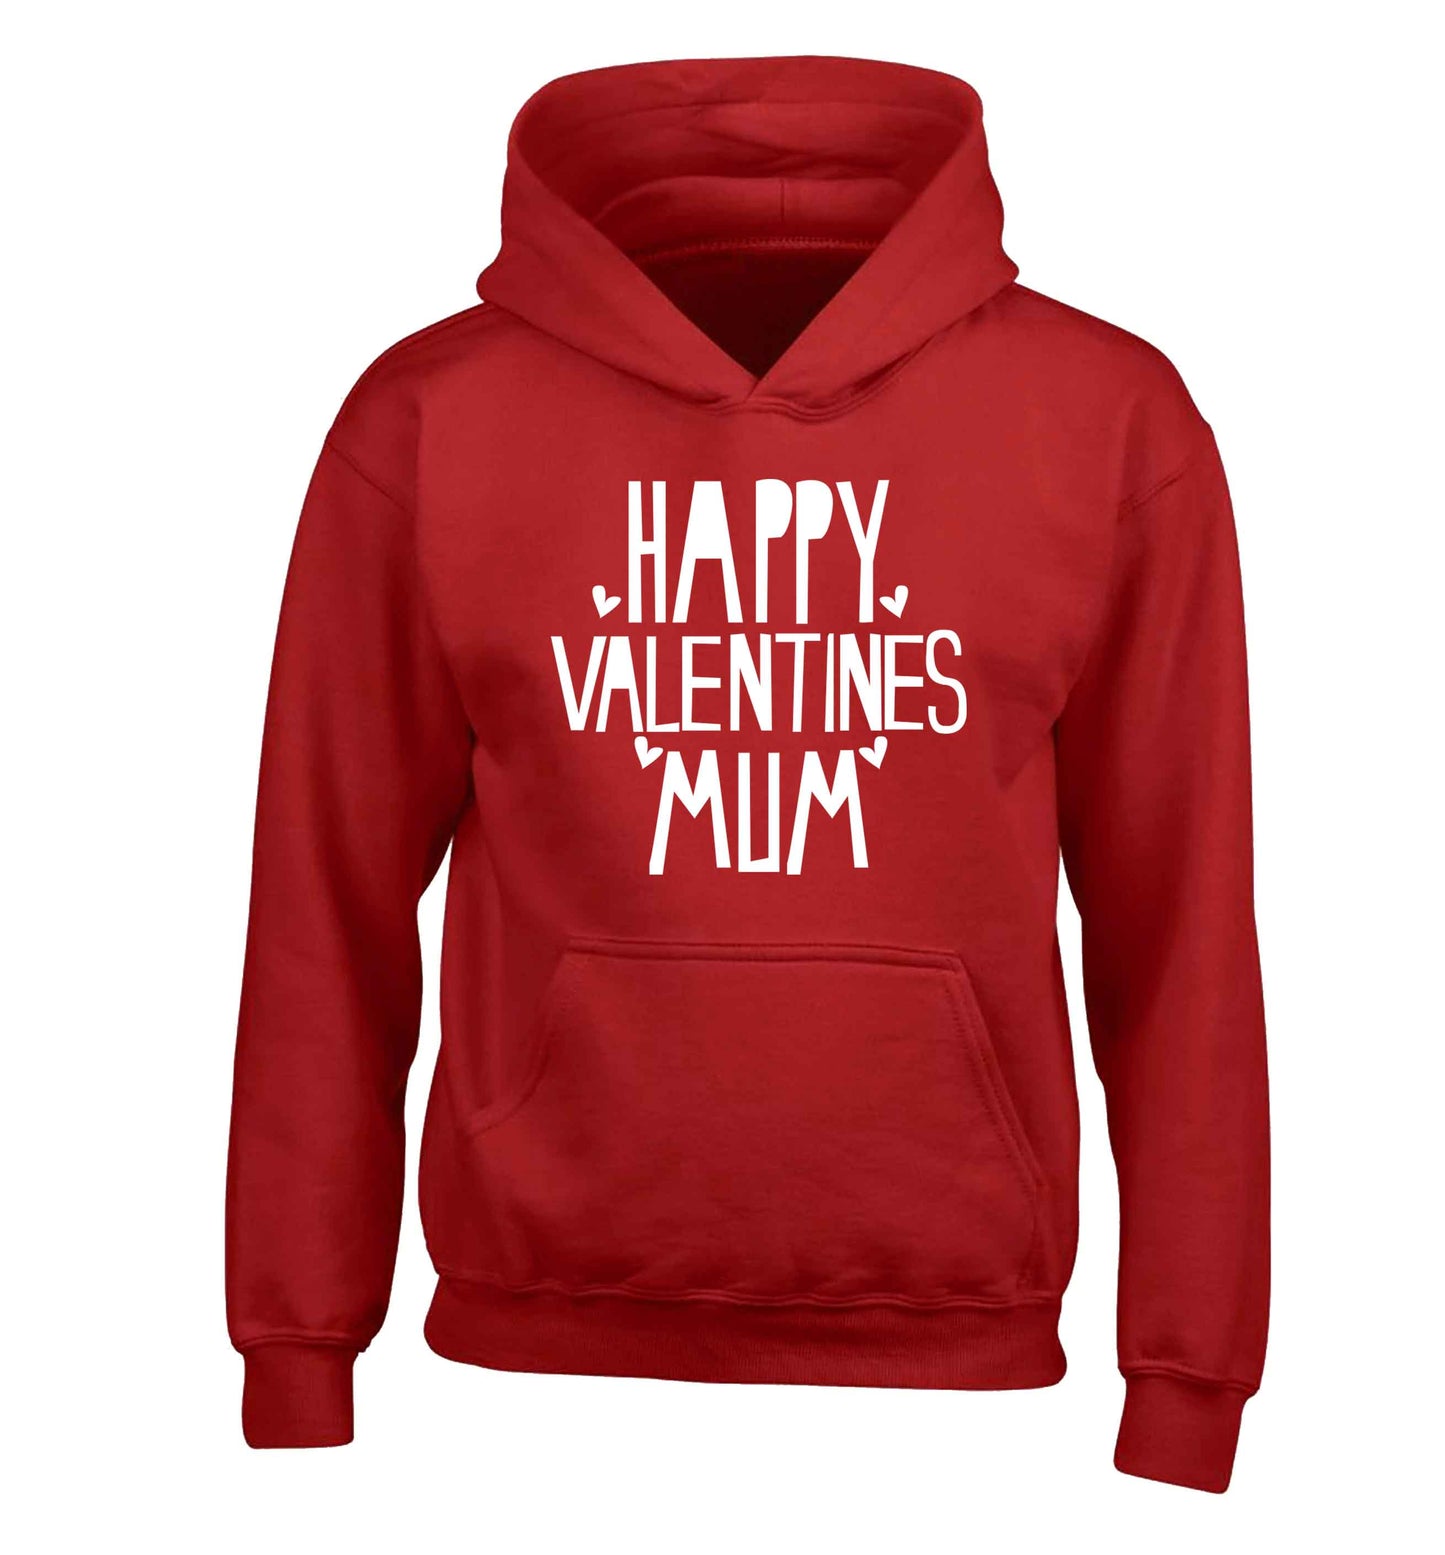 Happy valentines mum children's red hoodie 12-13 Years